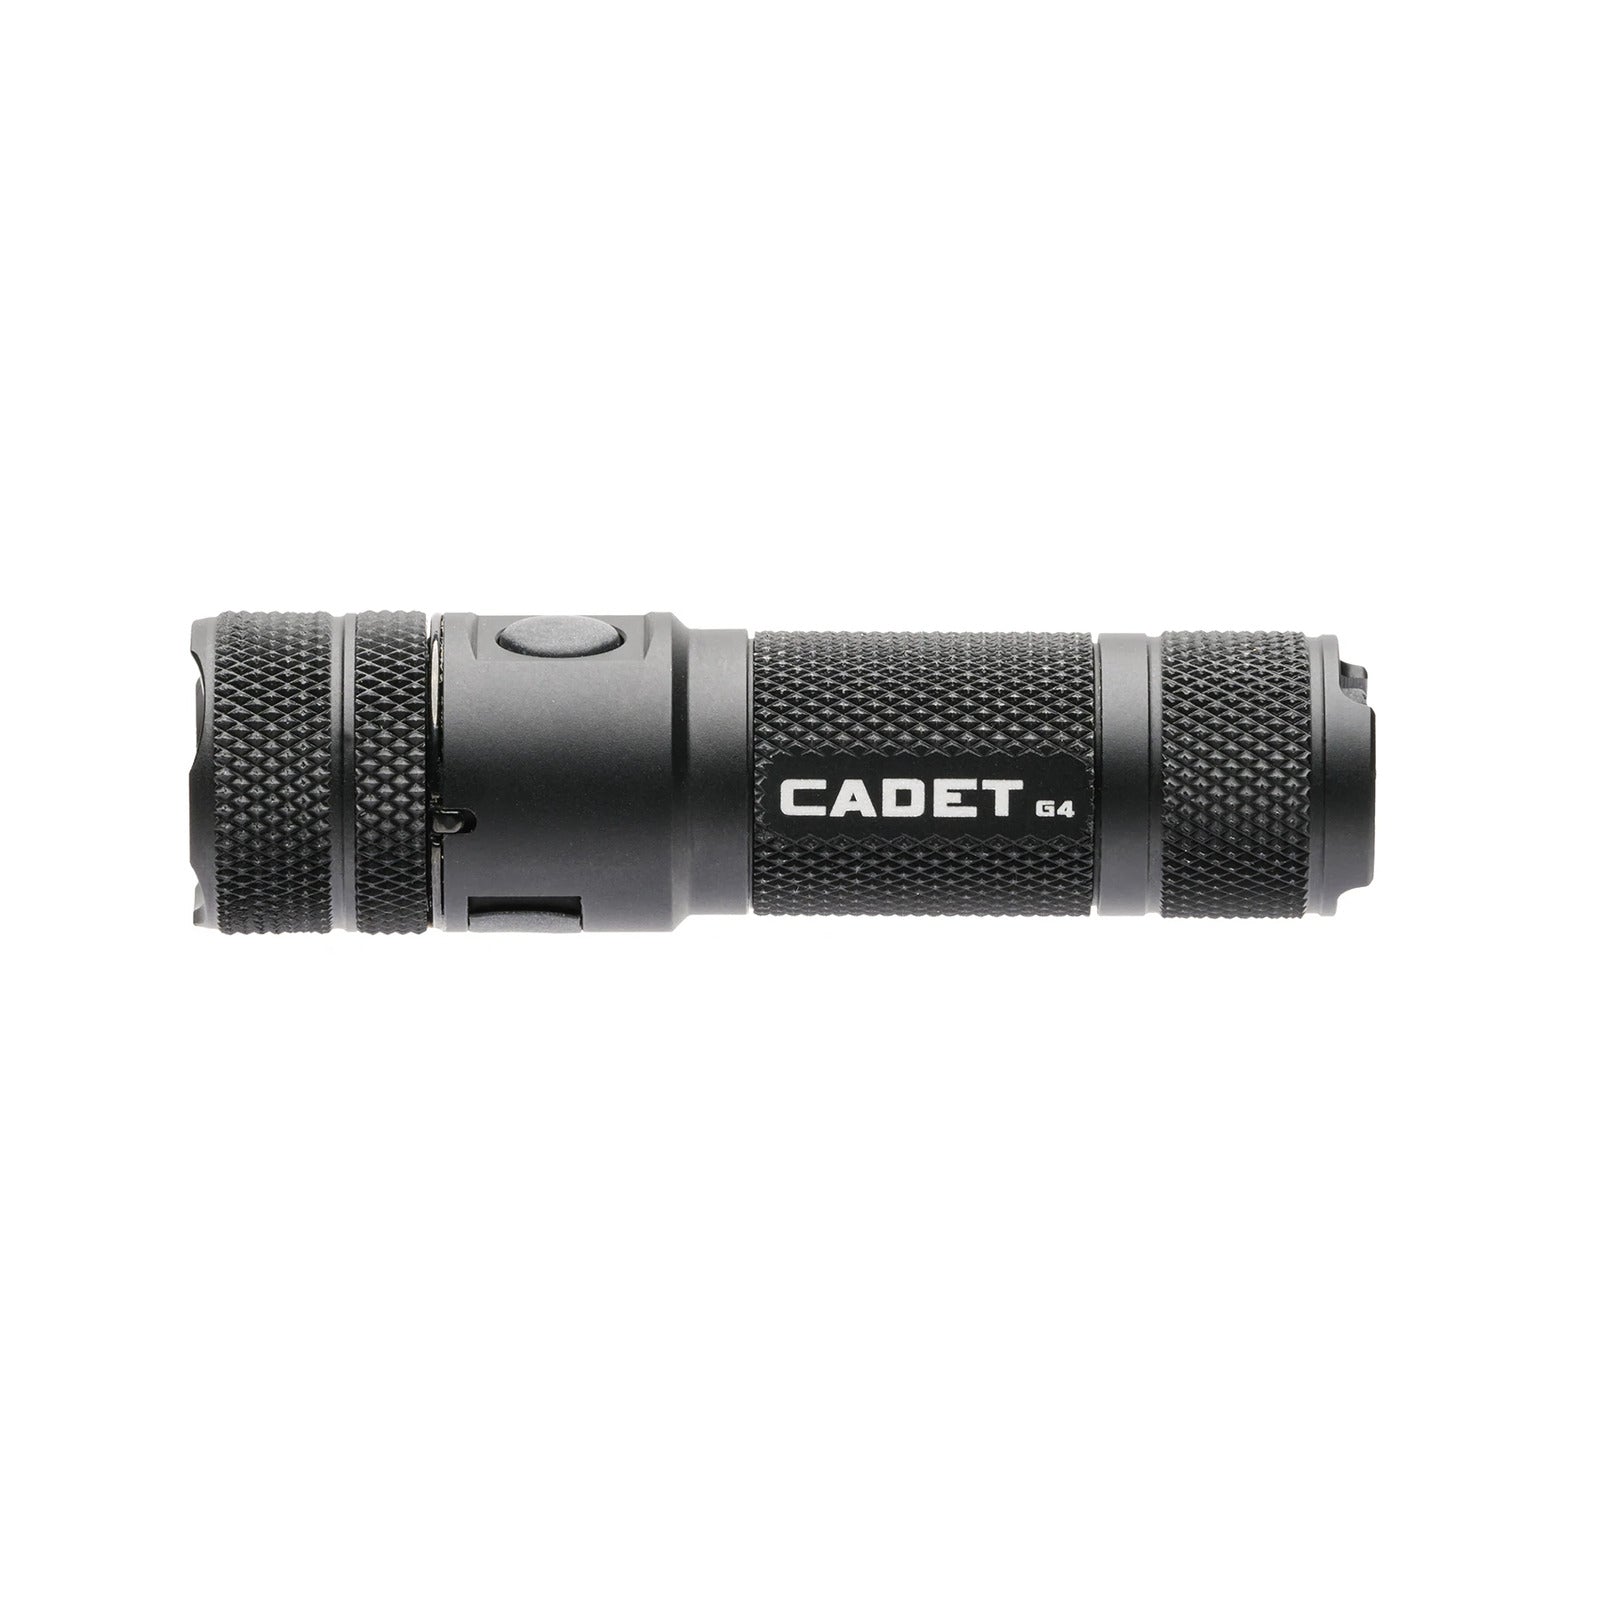 PowerTac Cadet-G4 1200 Lumen LED Flashlight New Upgraded Model Tactical Gear Australia Supplier Distributor Dealer